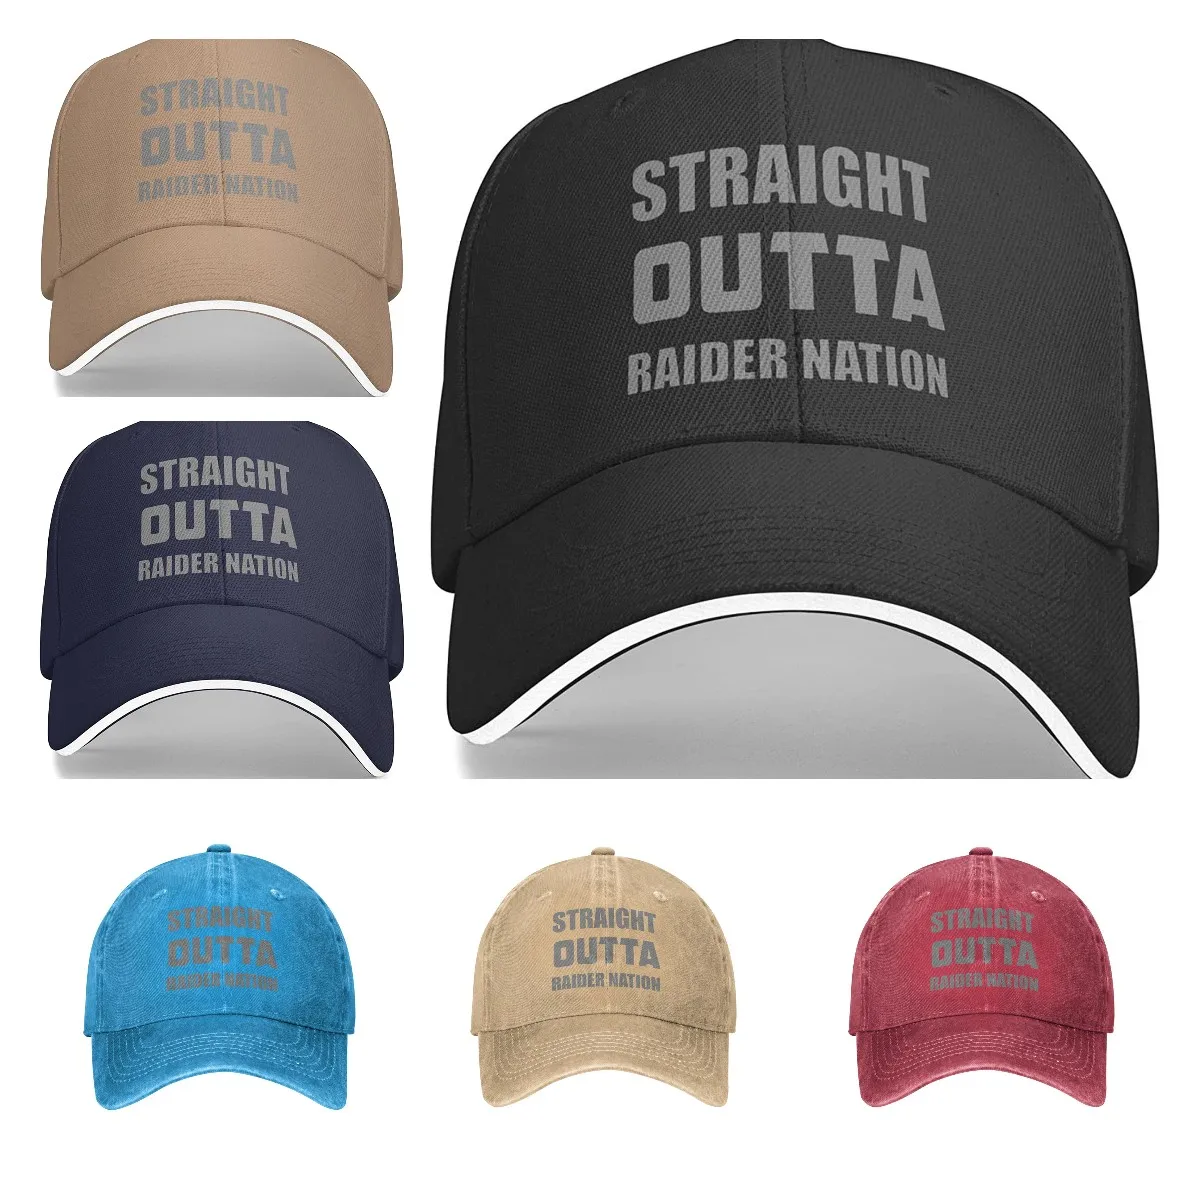 

Straight Outta Raider Nation Unisex Adult Fashion Baseball Cap Fashion Adjustable Dad Hat Sport Cap Classic Sandwich Caps